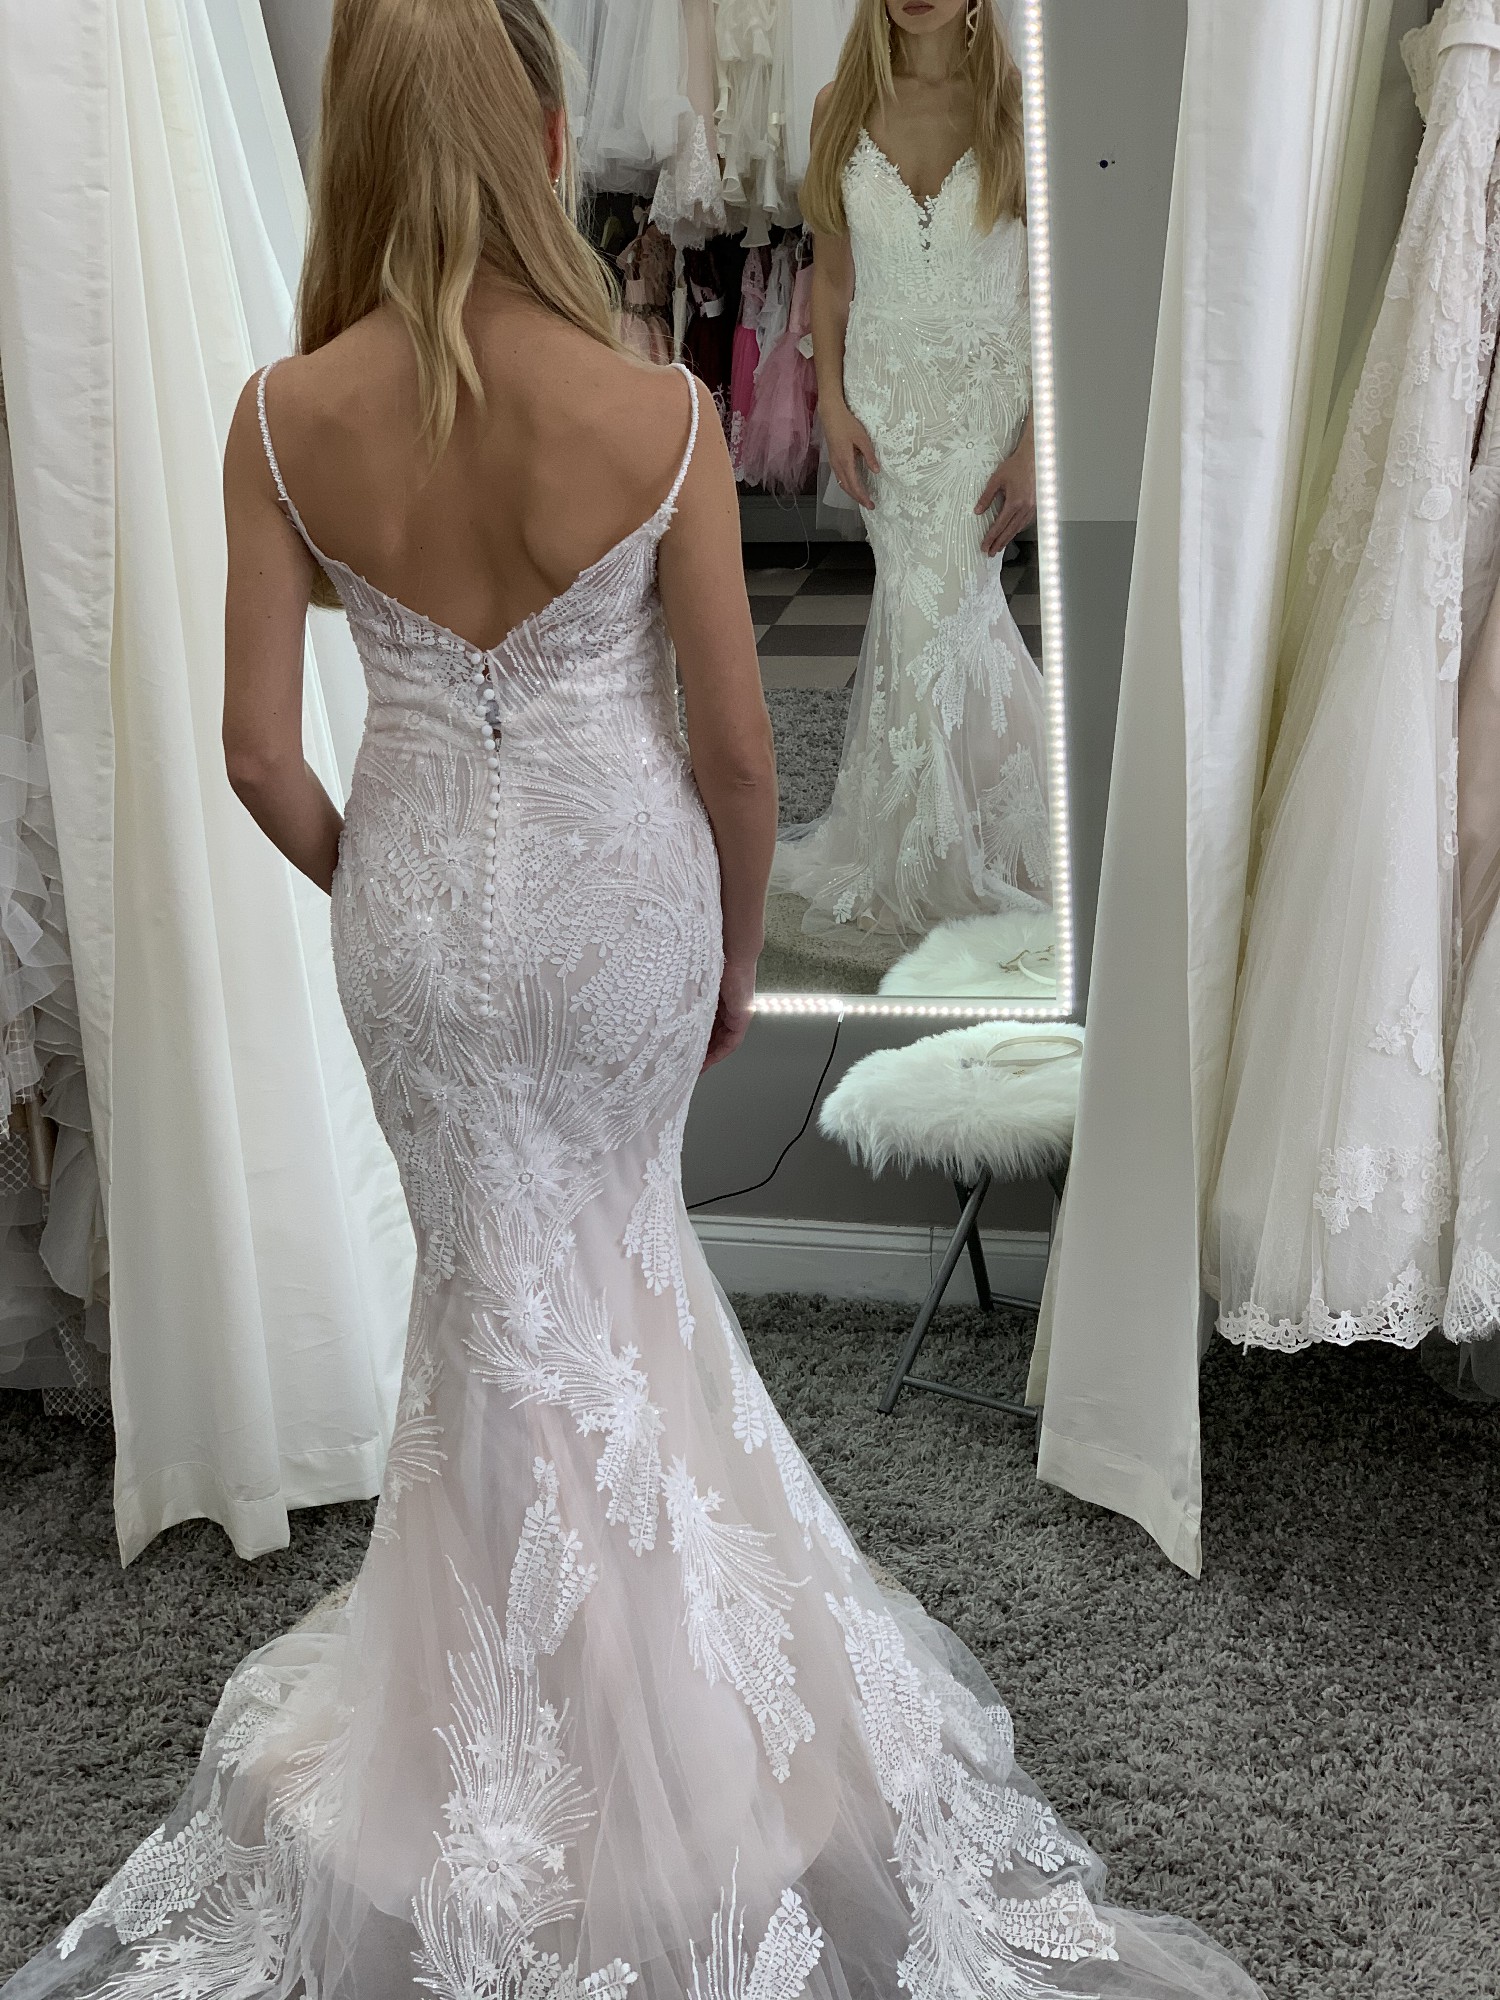 Pronovias Albiorix New Wedding Dress Save 20% - Stillwhite